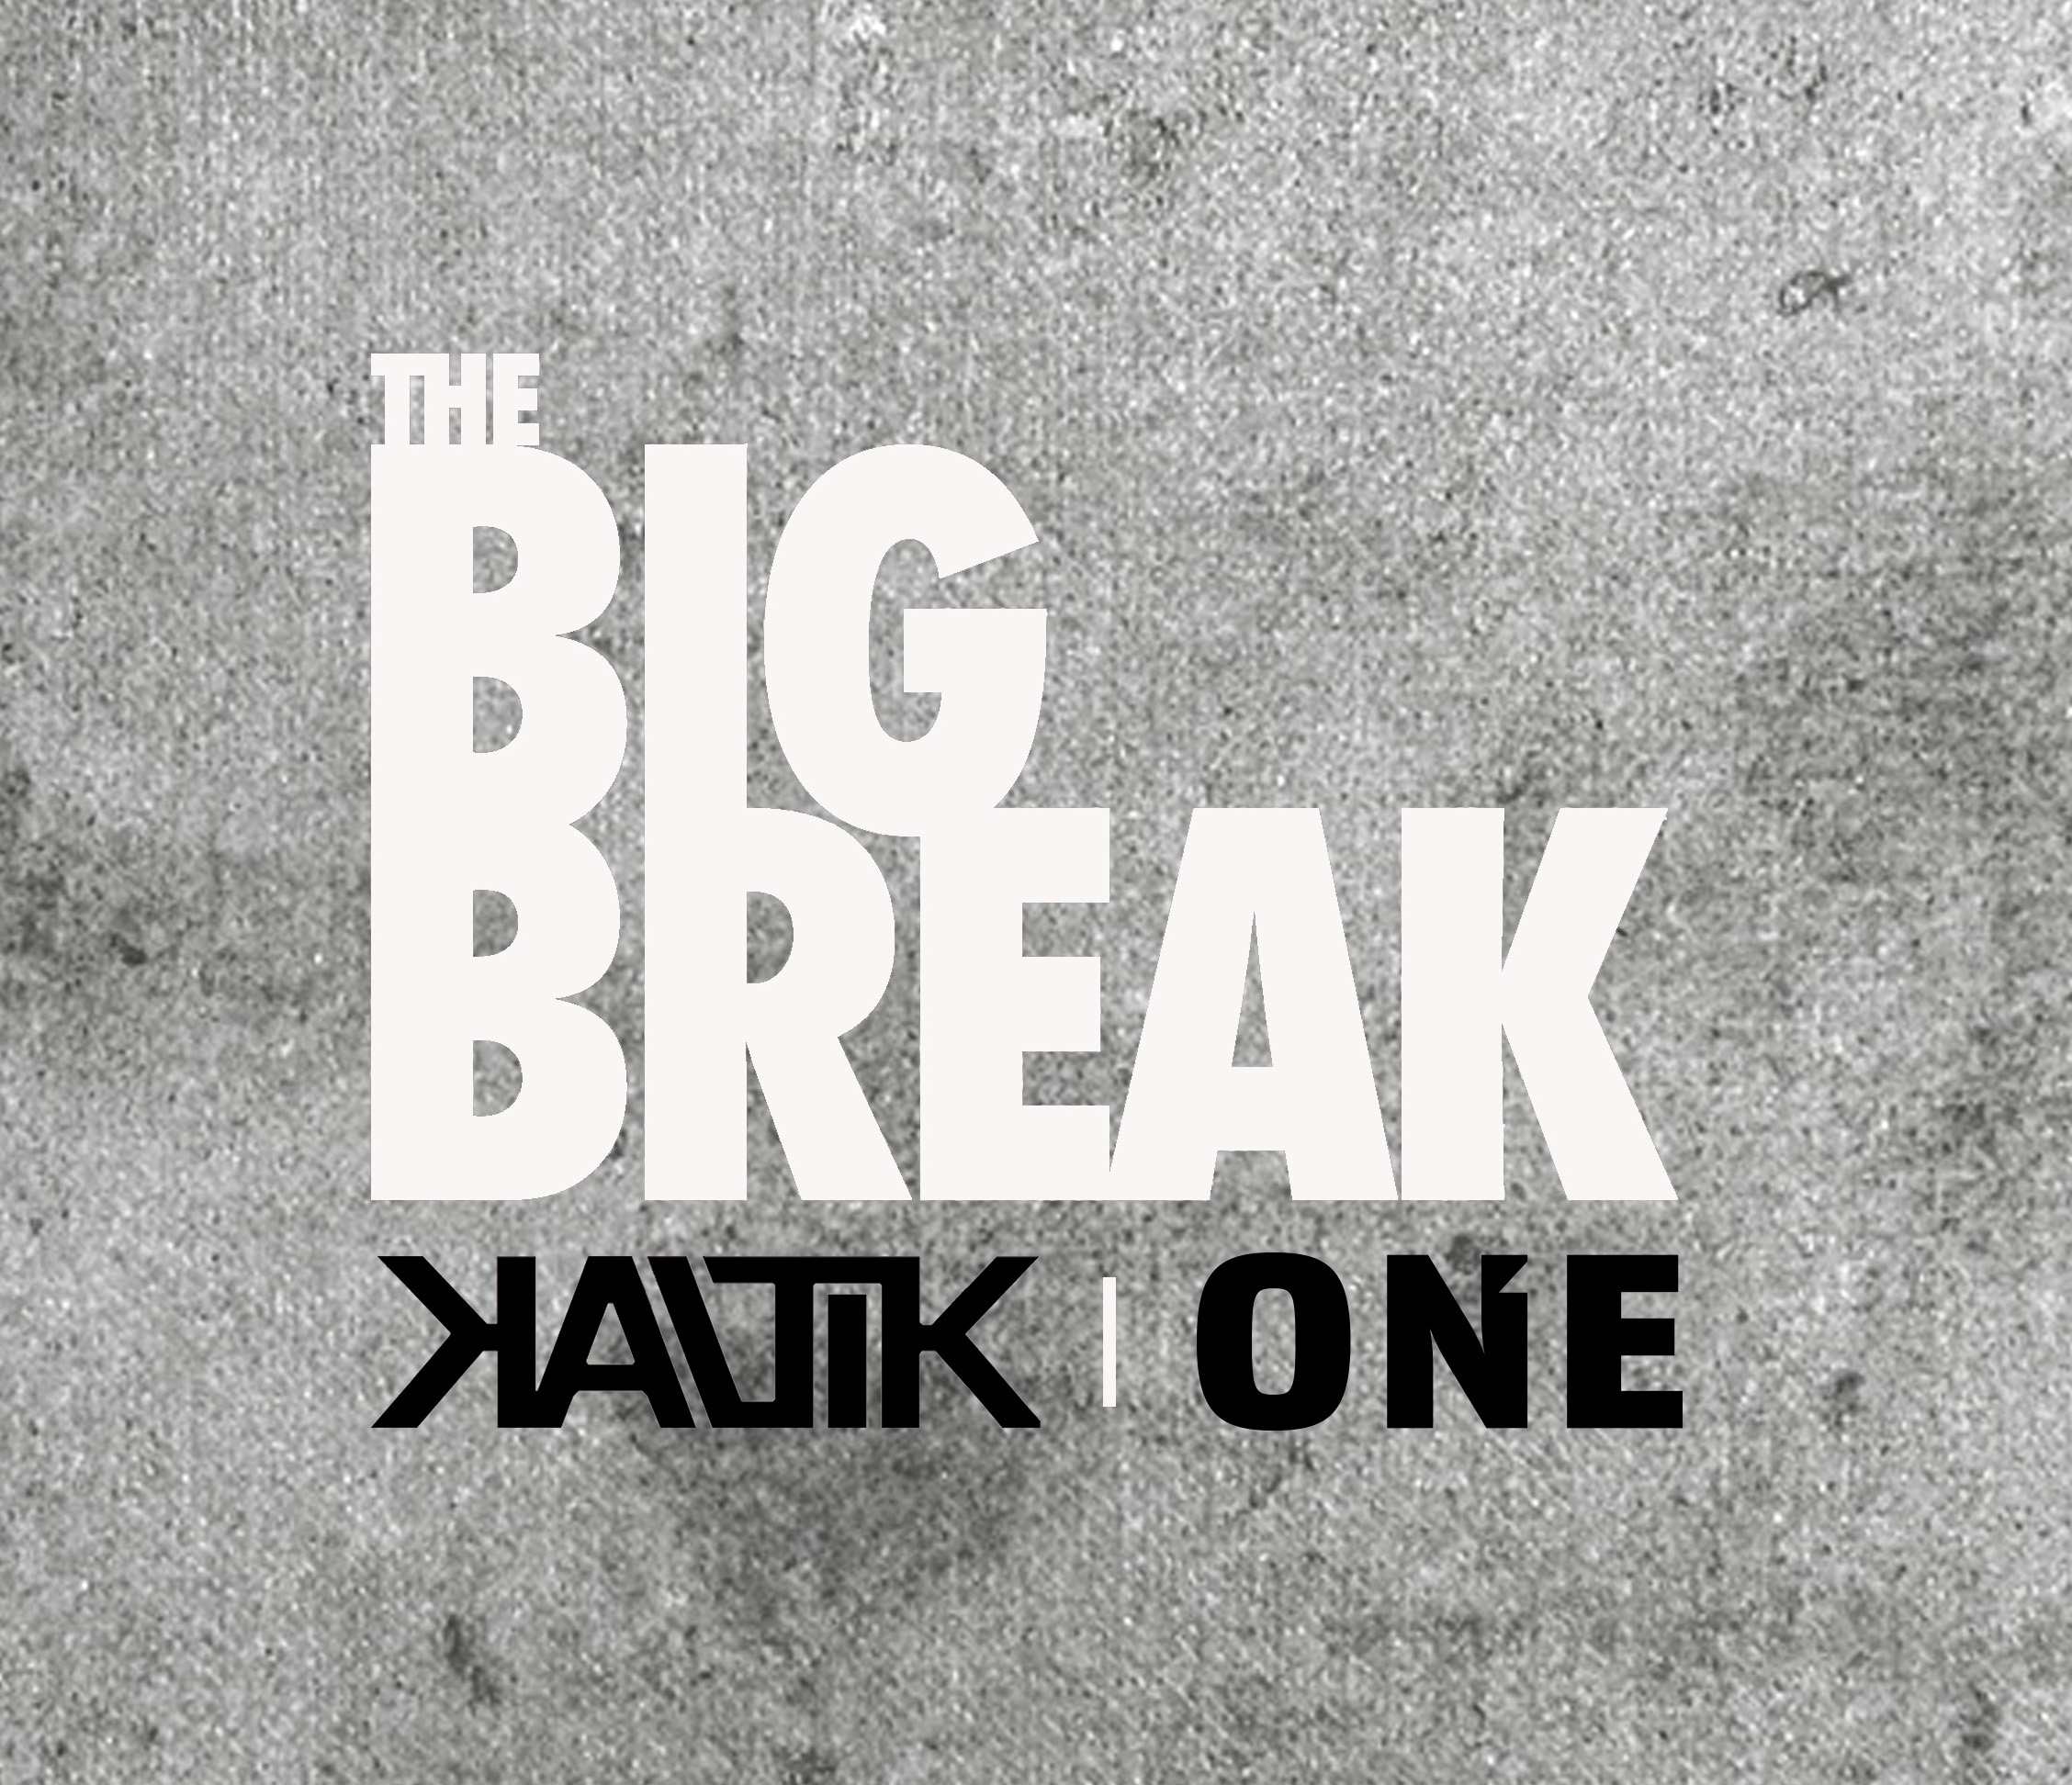 Kaltik’s The Big Break Edit Contest